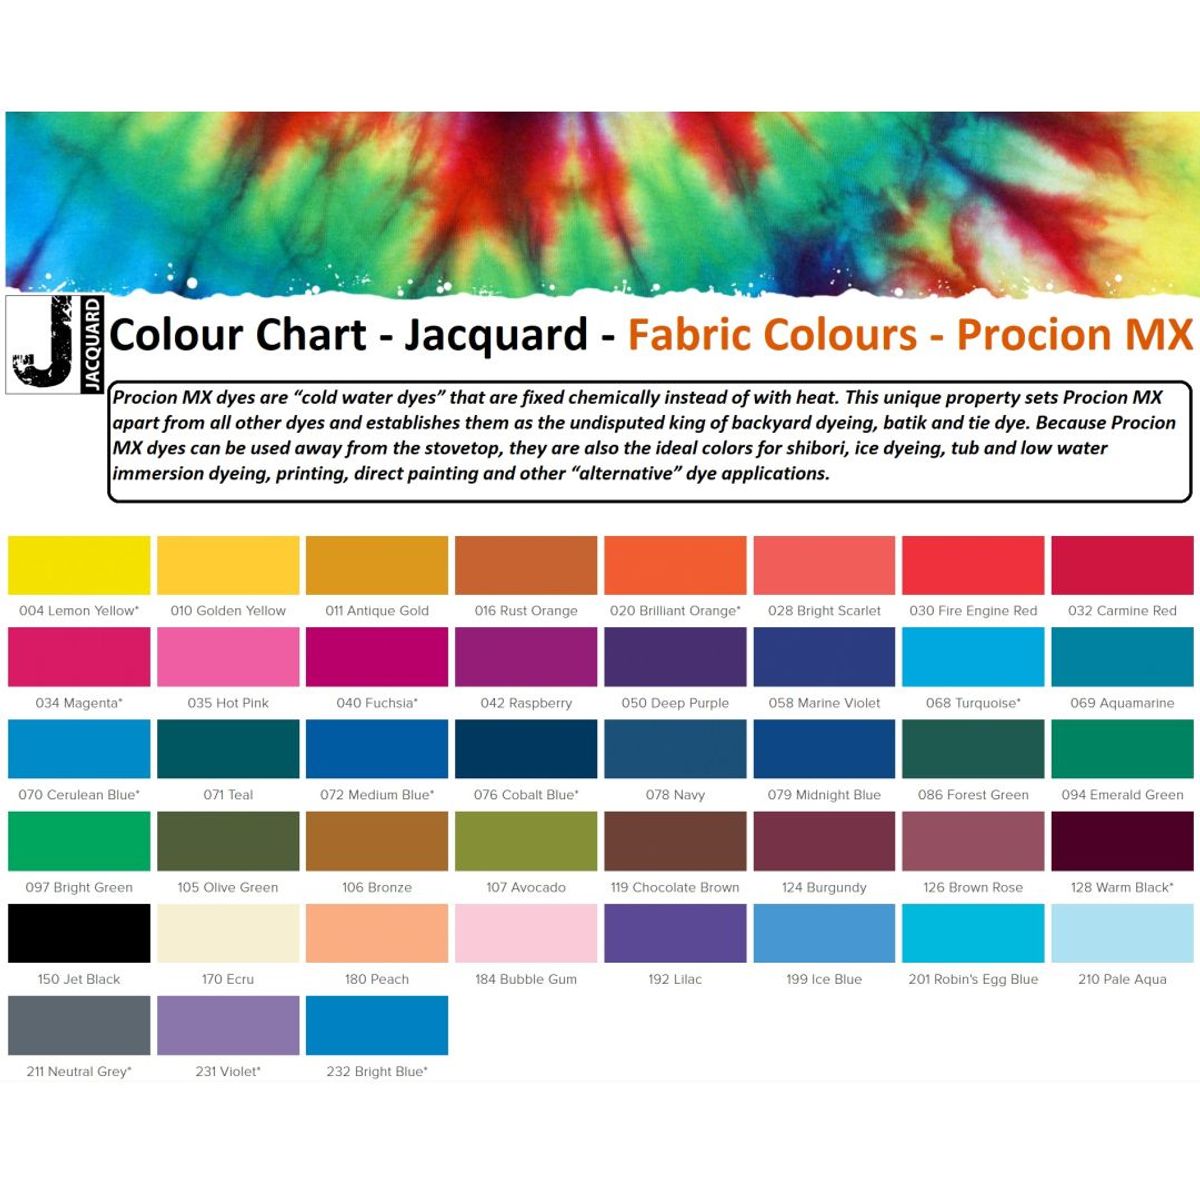 Jacquard - Procion MX Dye - Fabric Textile - Olive Green 105